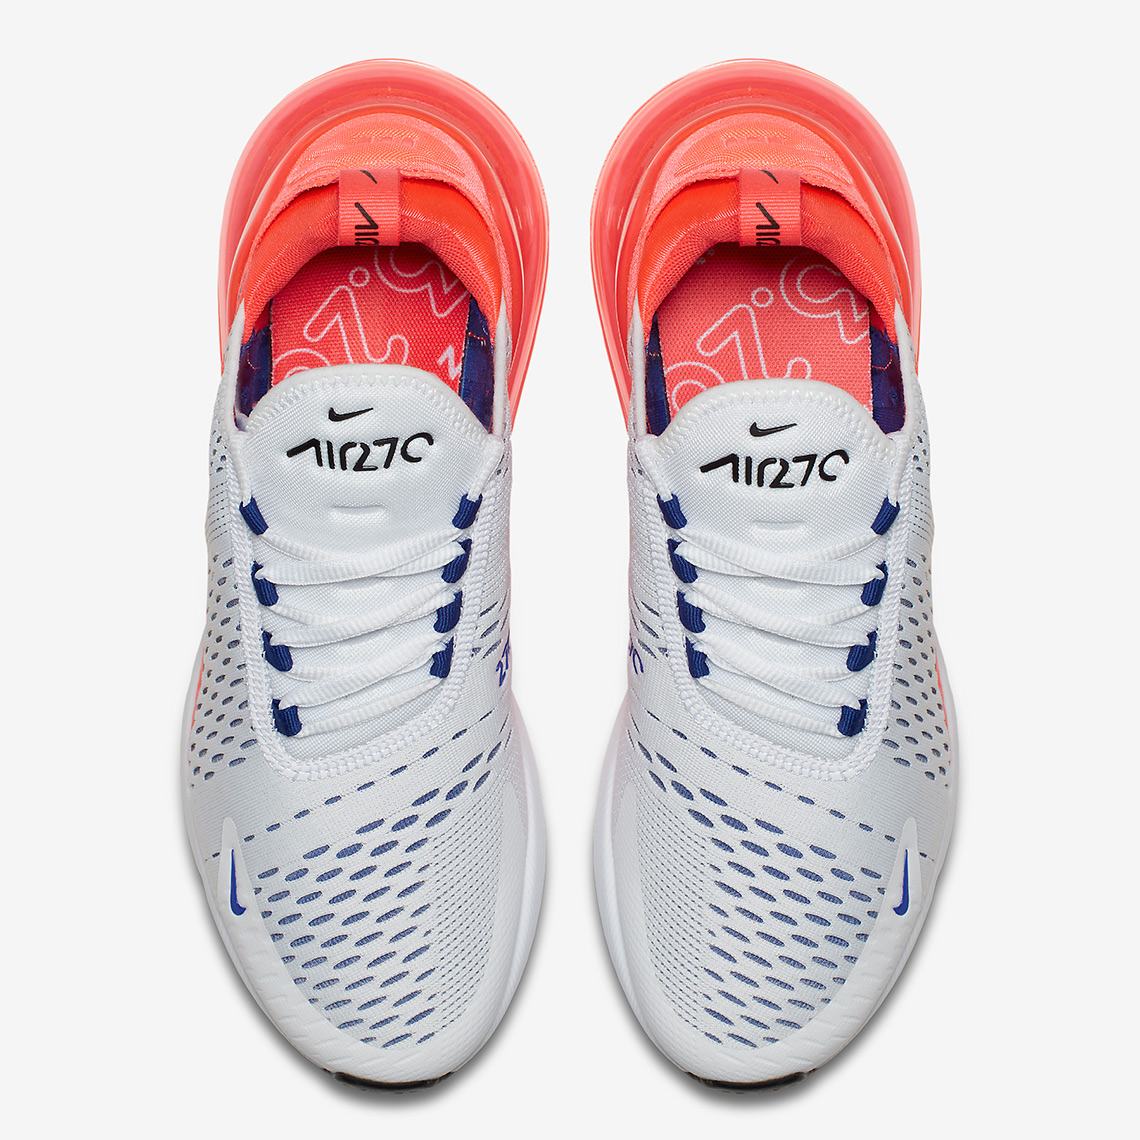 Nike Air Max 270 Og Pack Release Info 6